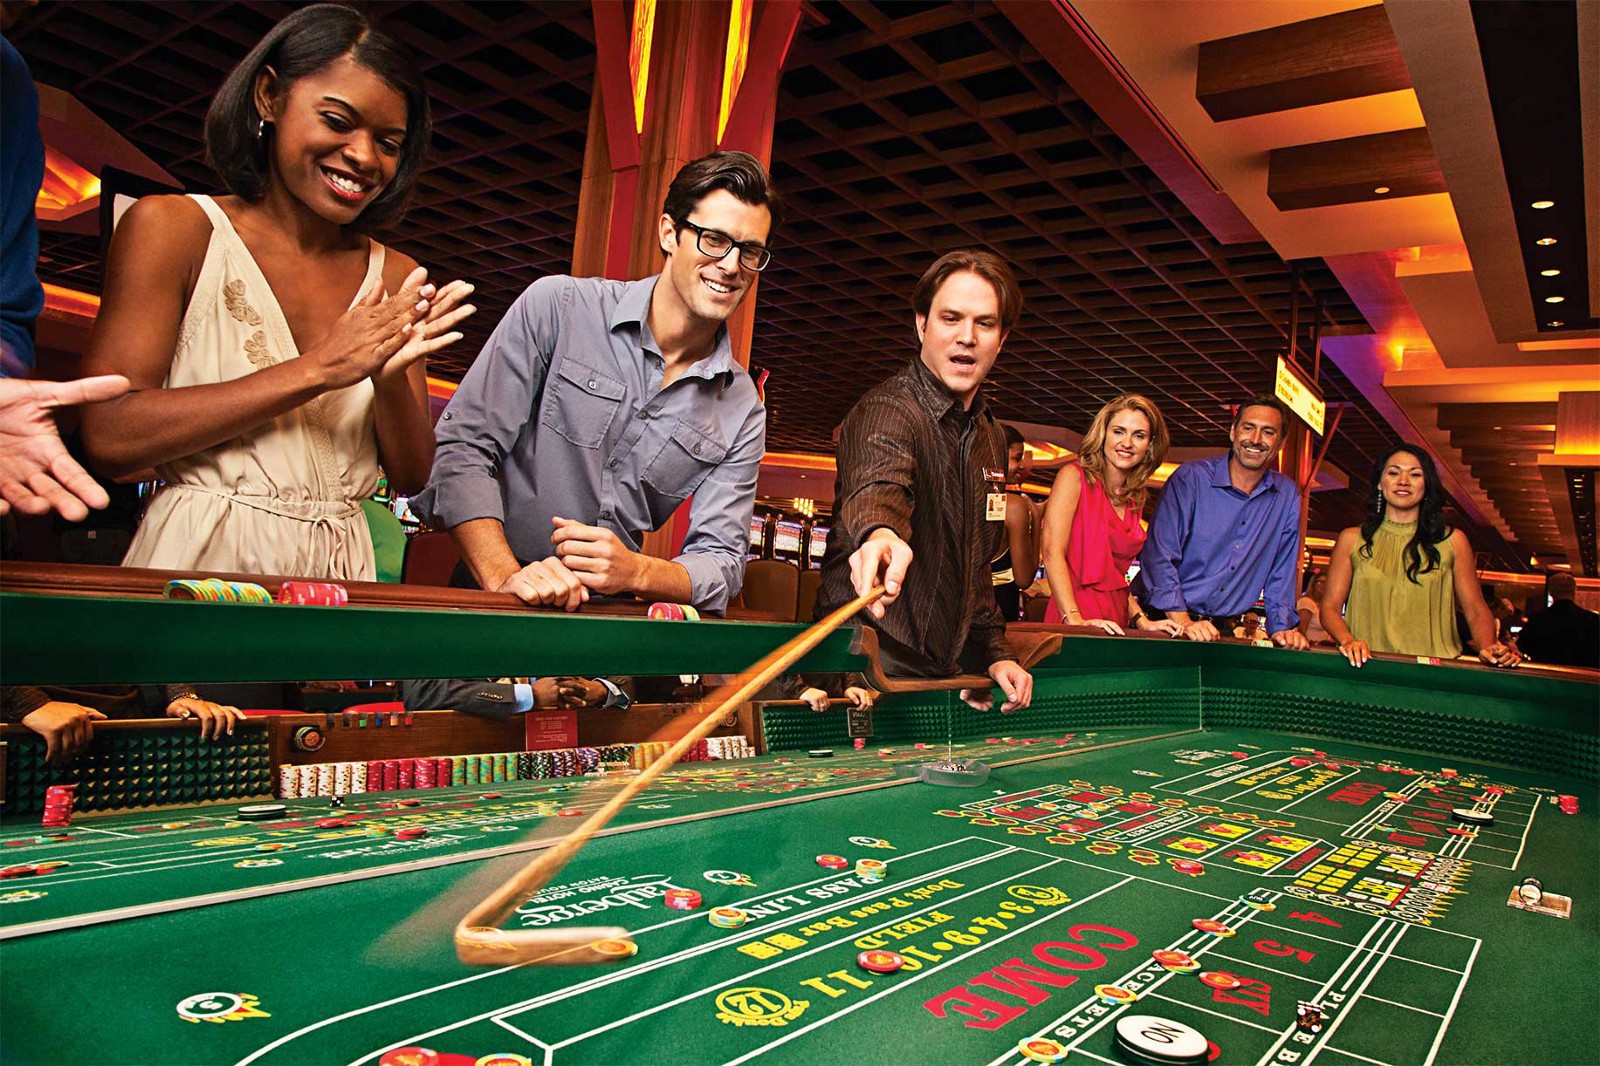 Enjoy your gambling experience through online